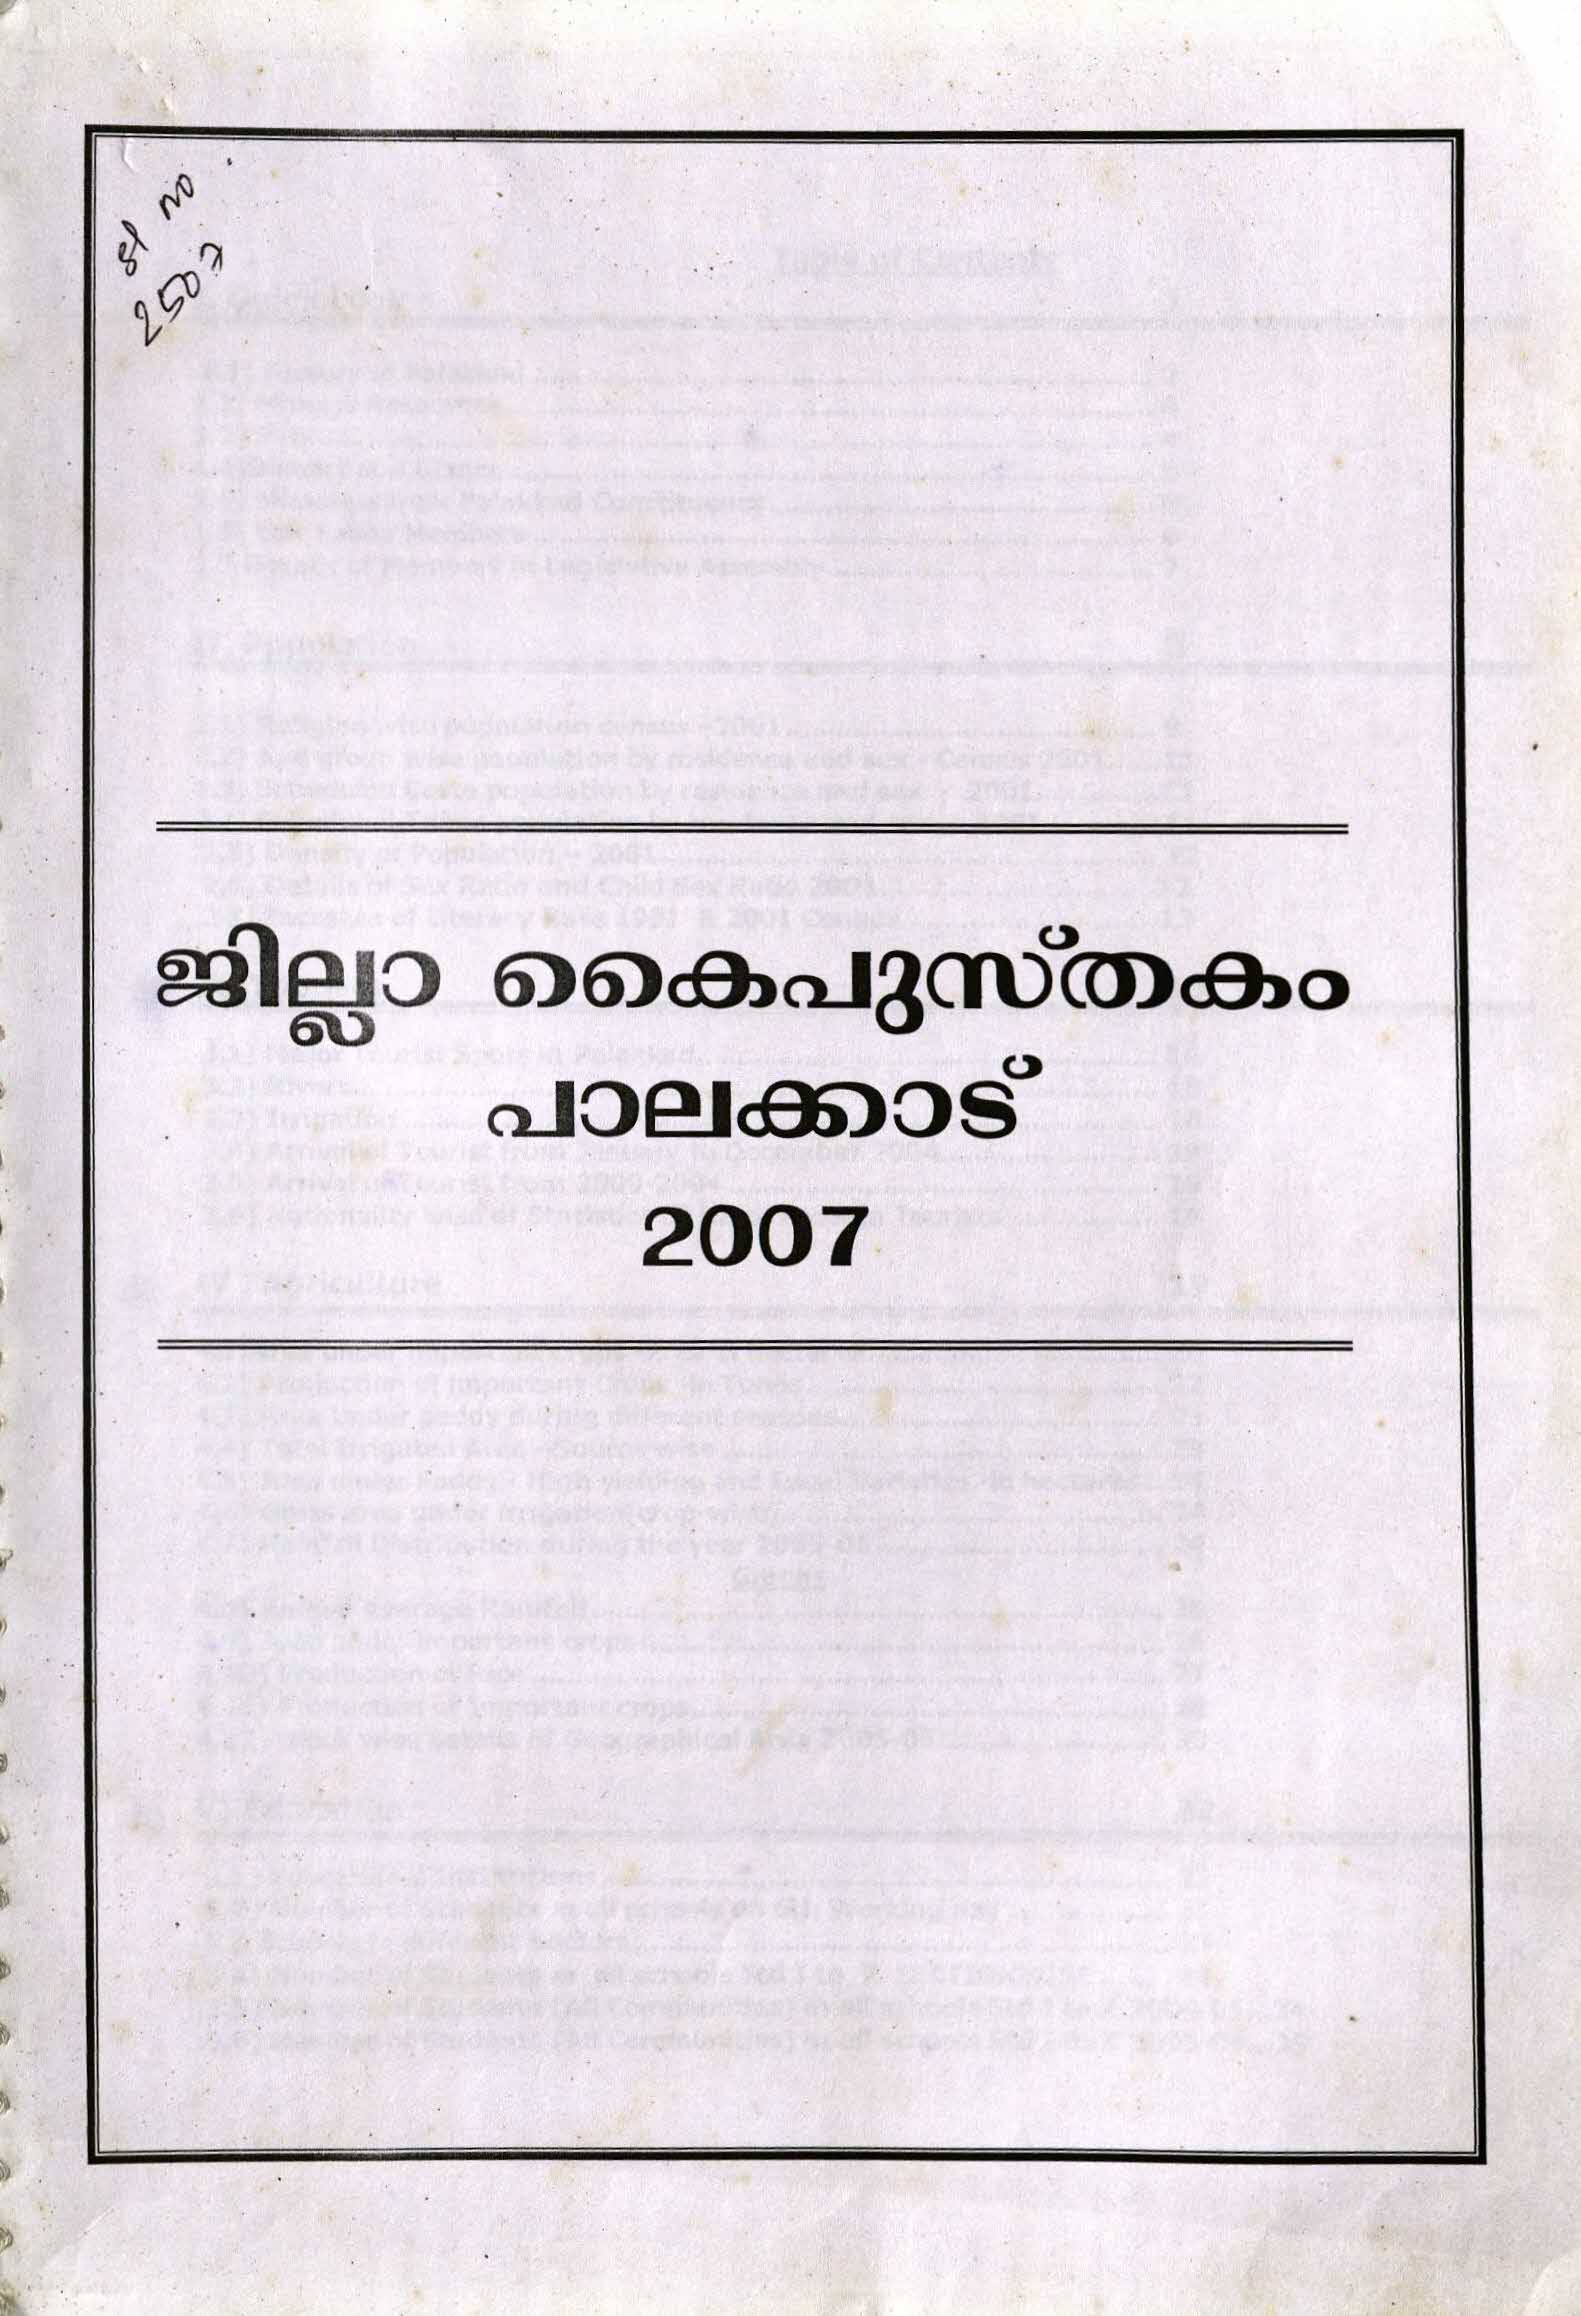 District Handbook 2007 - palakkad District